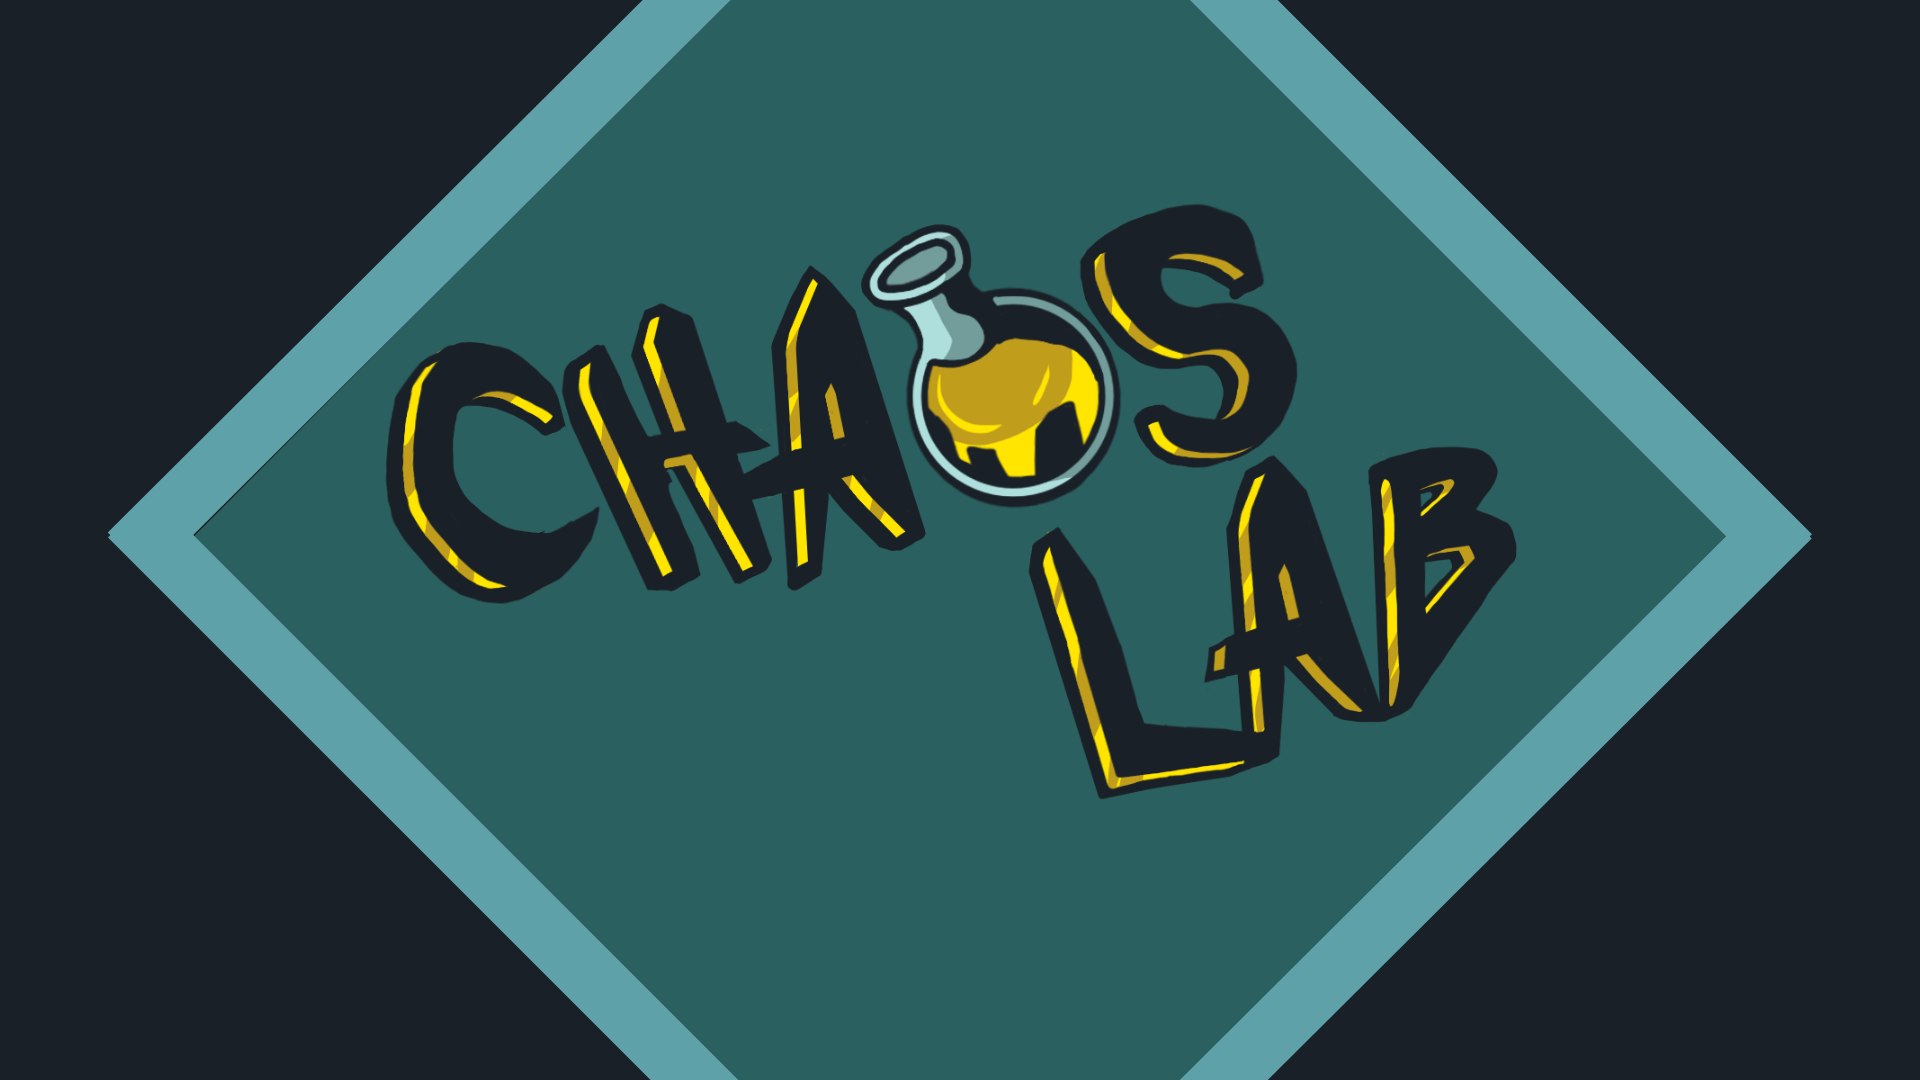 Chaos Lab